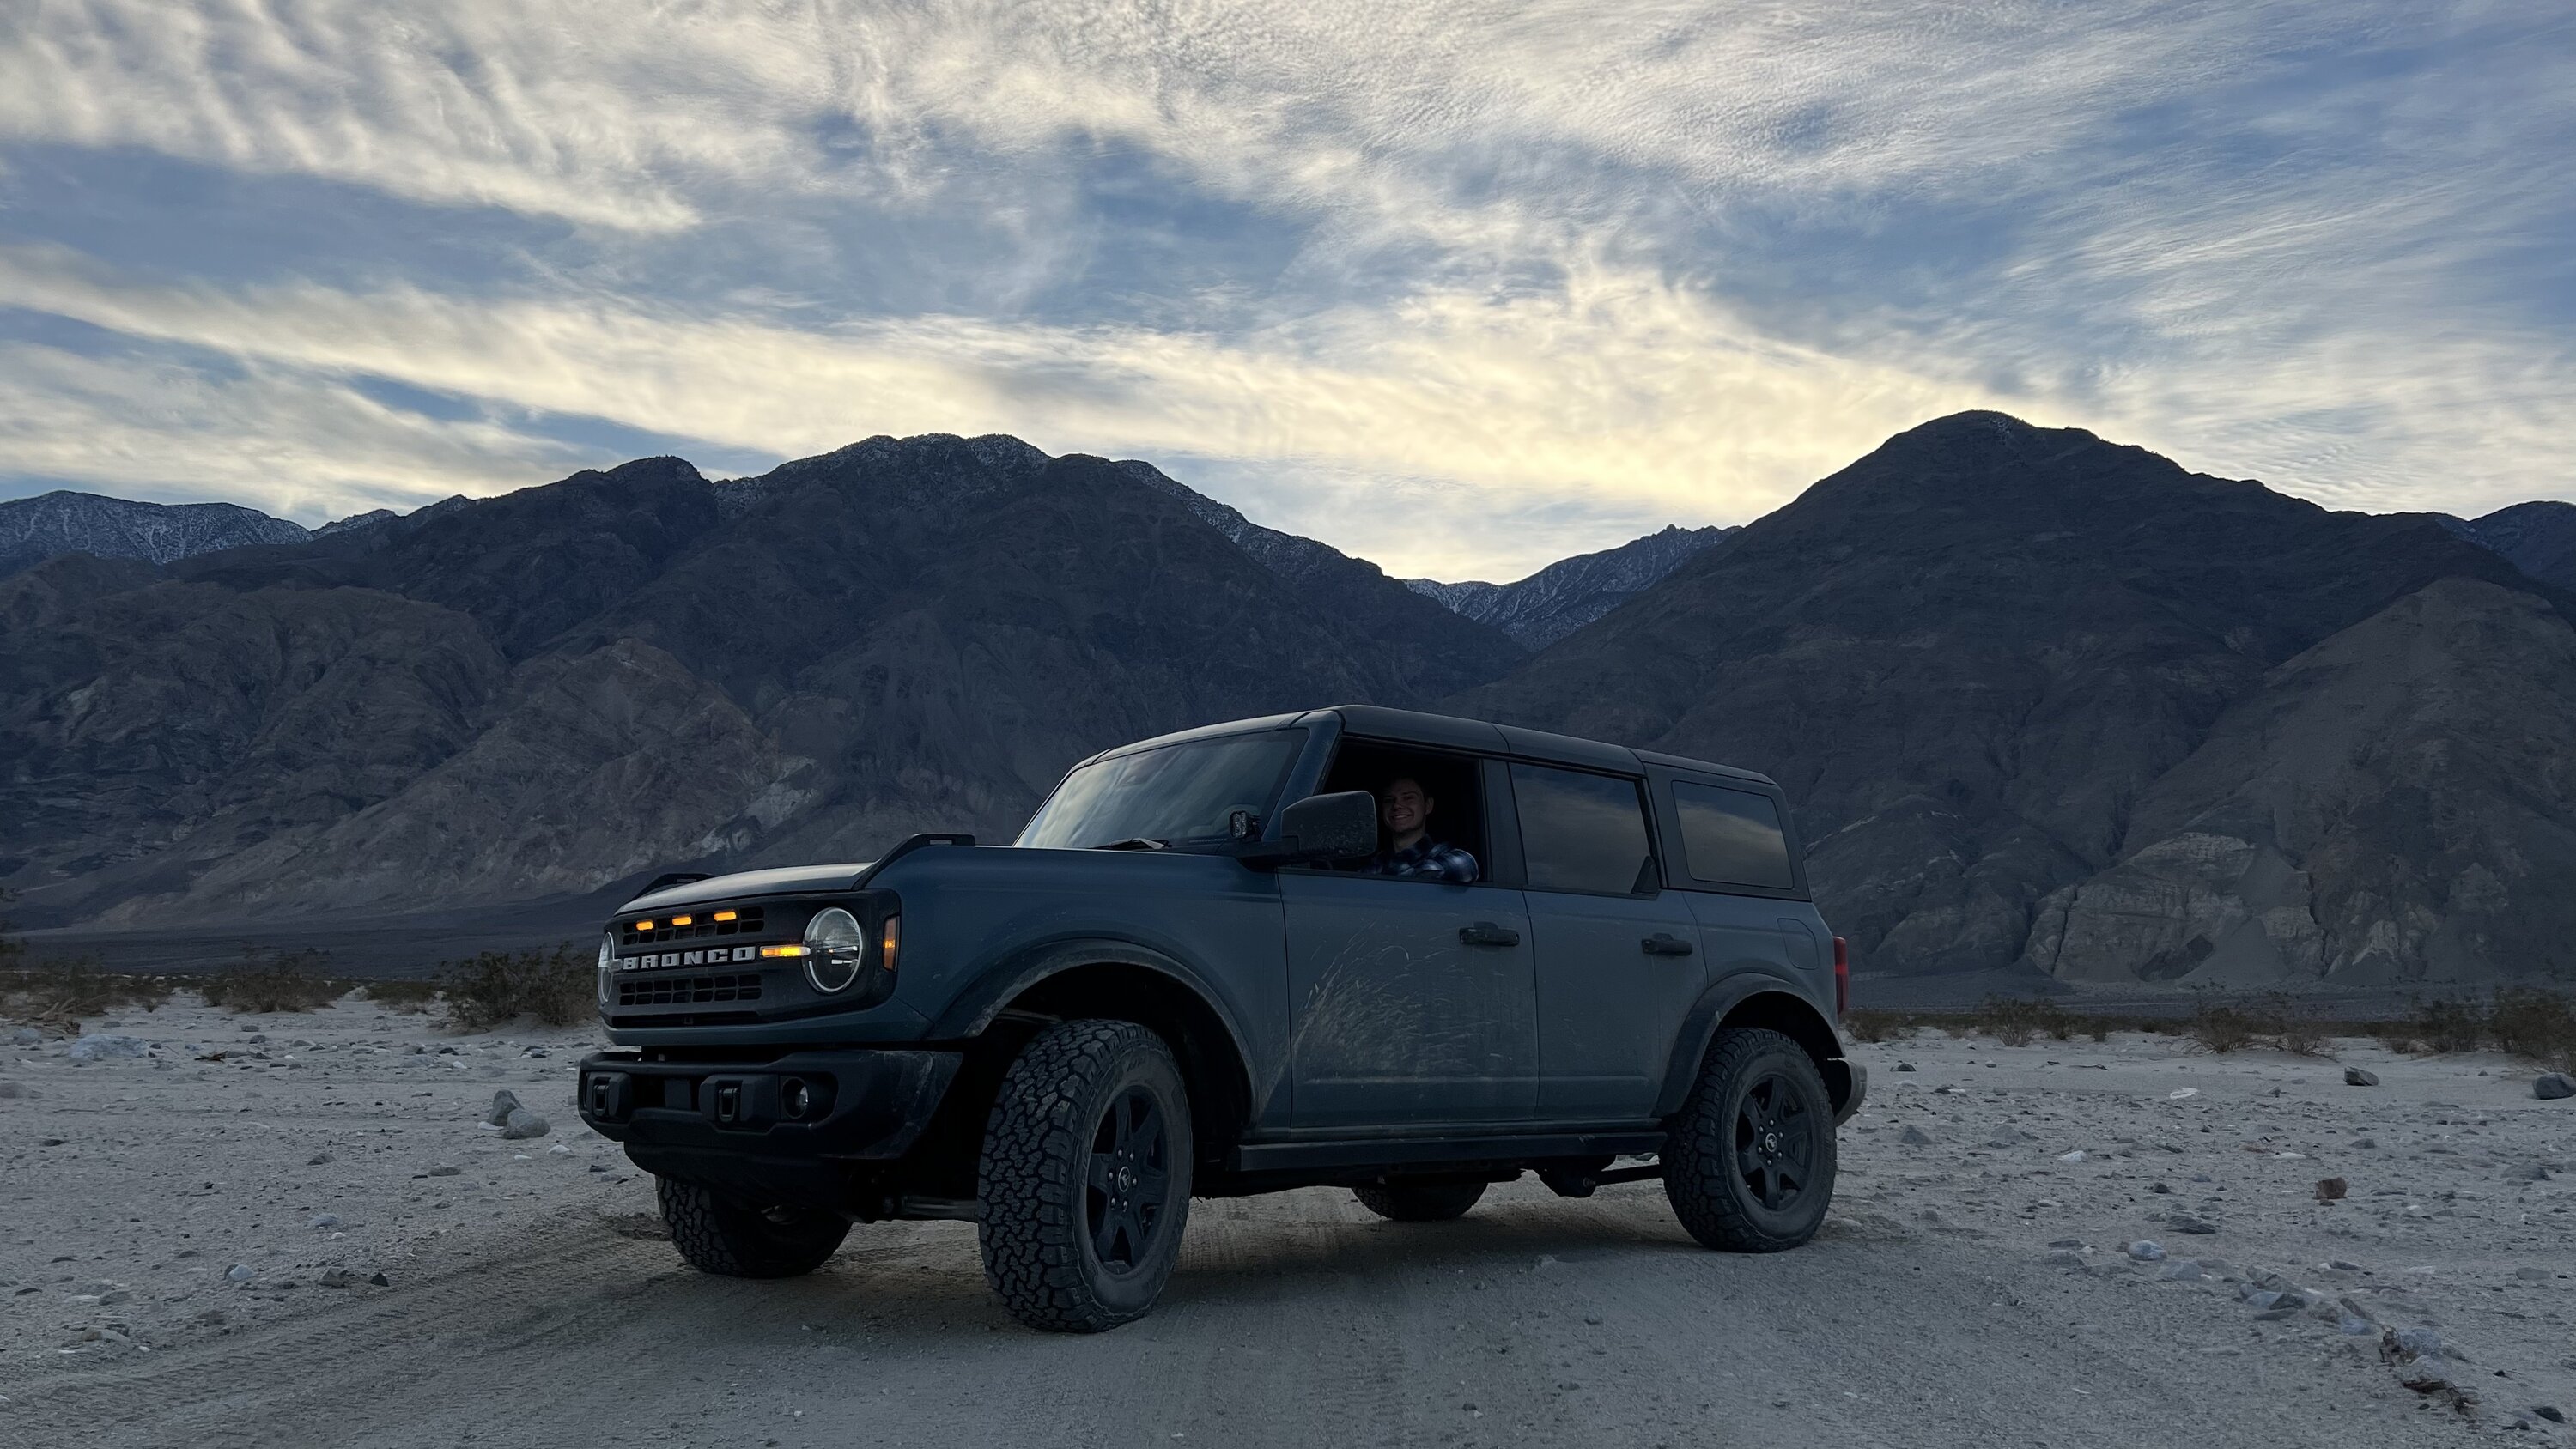 Ford Bronco Adventures in Death Valley B6D00659-9E21-4C83-831A-954E8CCDE9B6